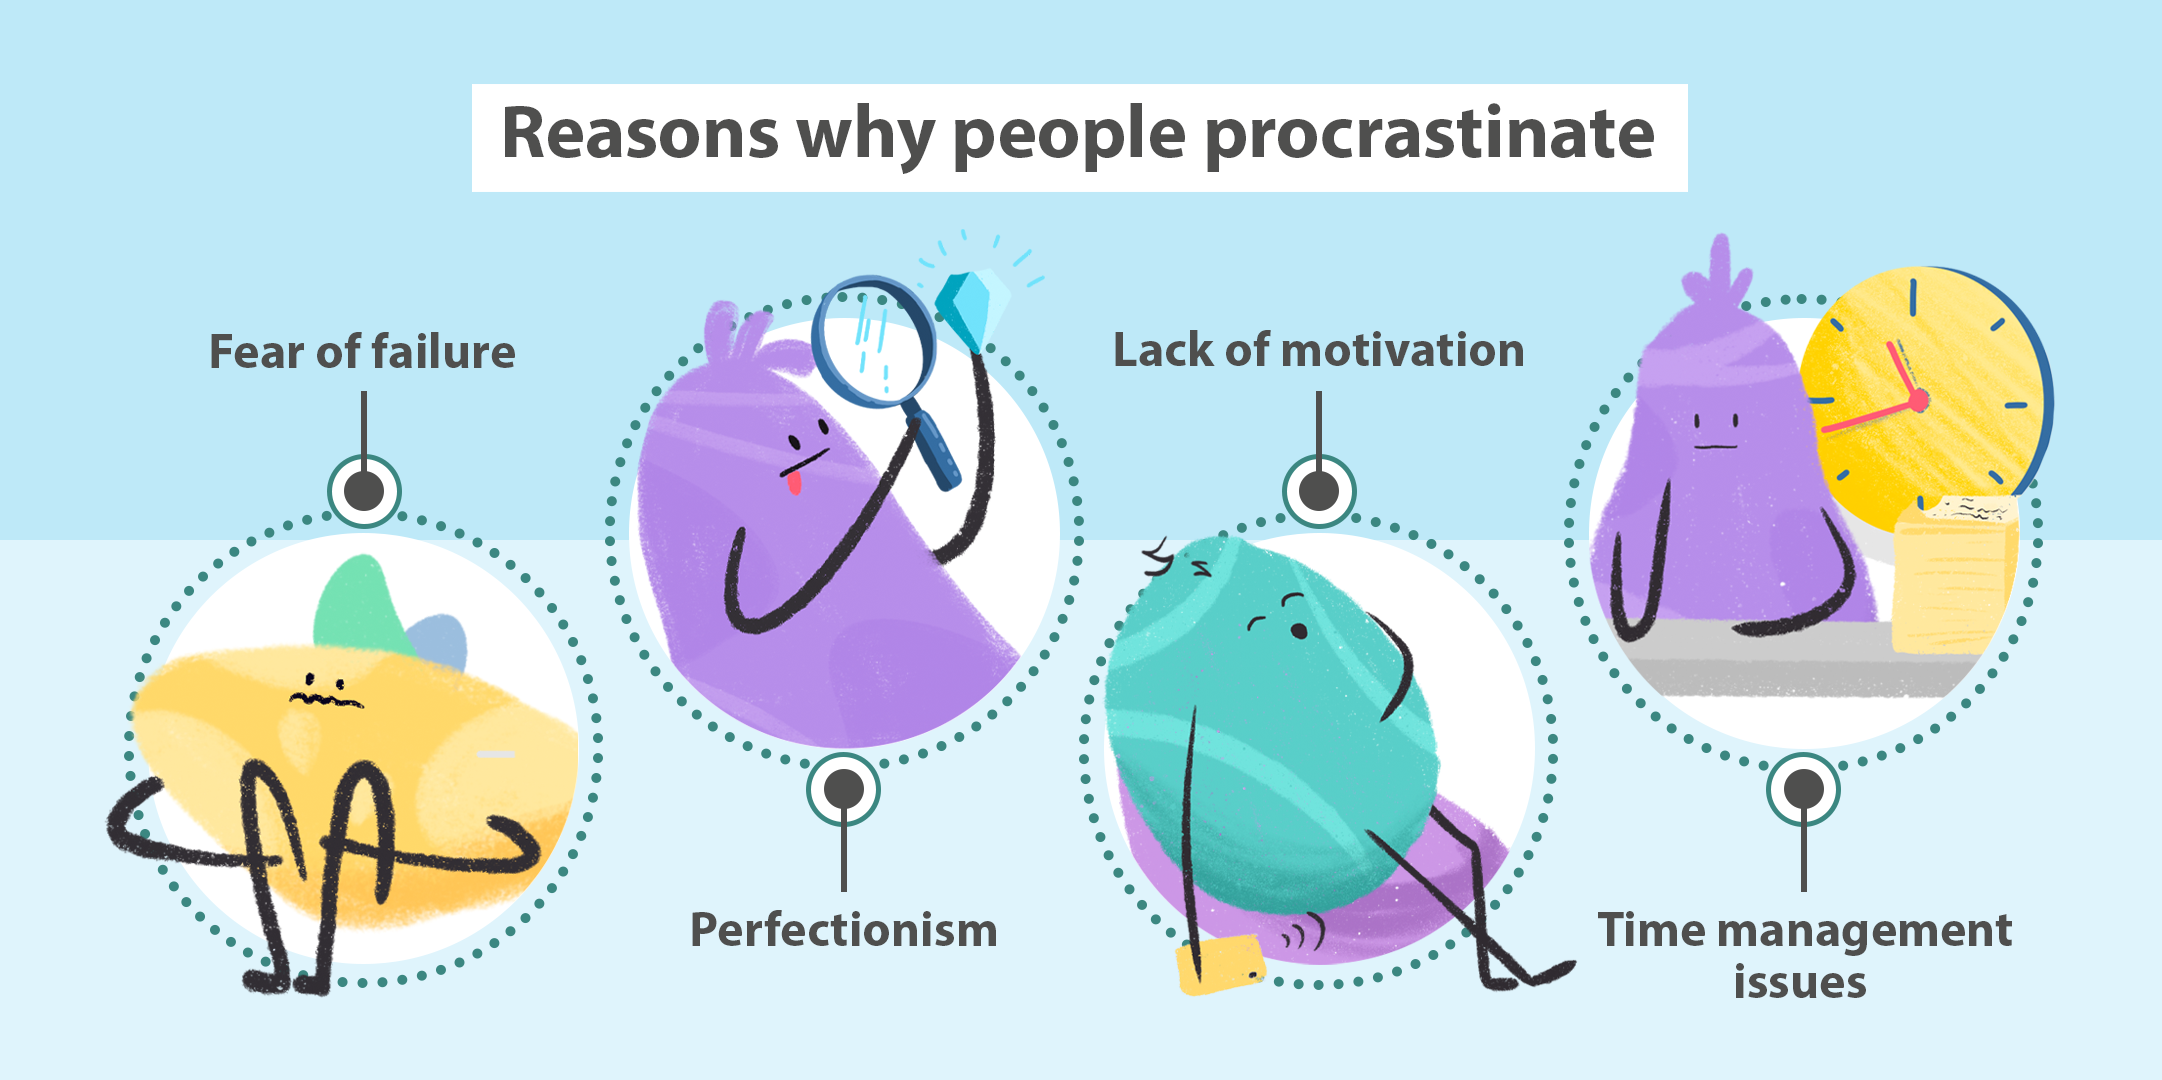 Four main procrastination reasons